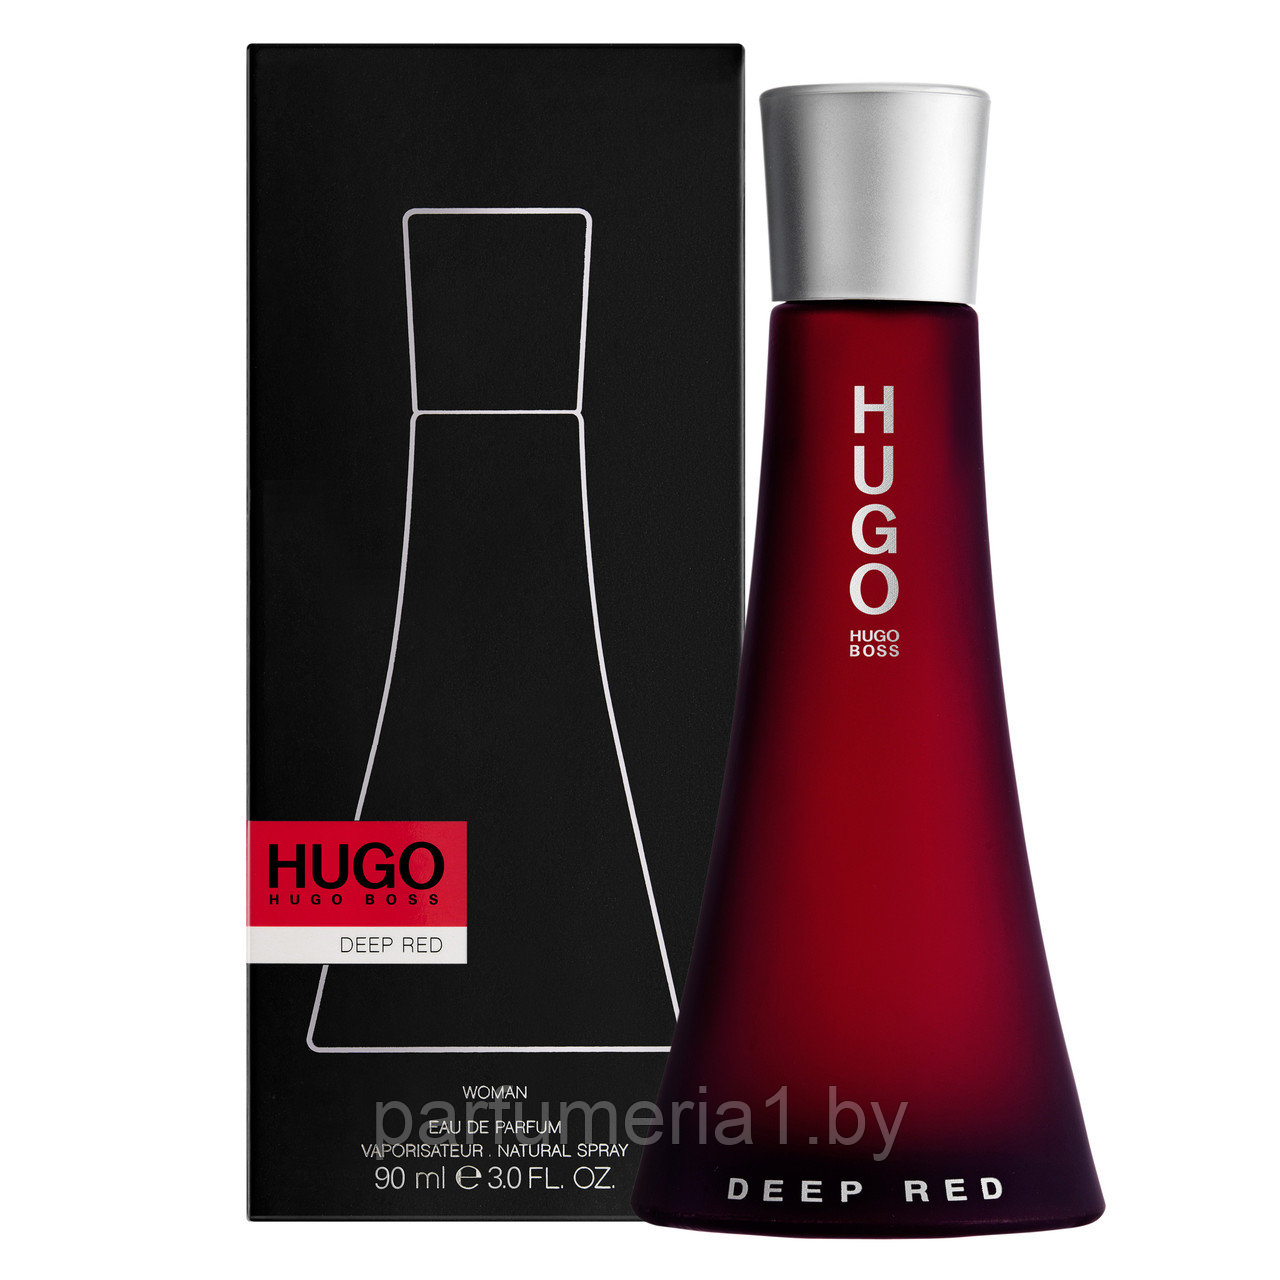 Хьюго босс дип. Хуго босс женские дип ред 50 мл. Hugo Boss Deep Red EDP 50 ml. Hugo Boss Deep Red Reni. Туалетная вода женская Hugo Boss Deep Red Хьюго босс дип Рэд 90 мл.